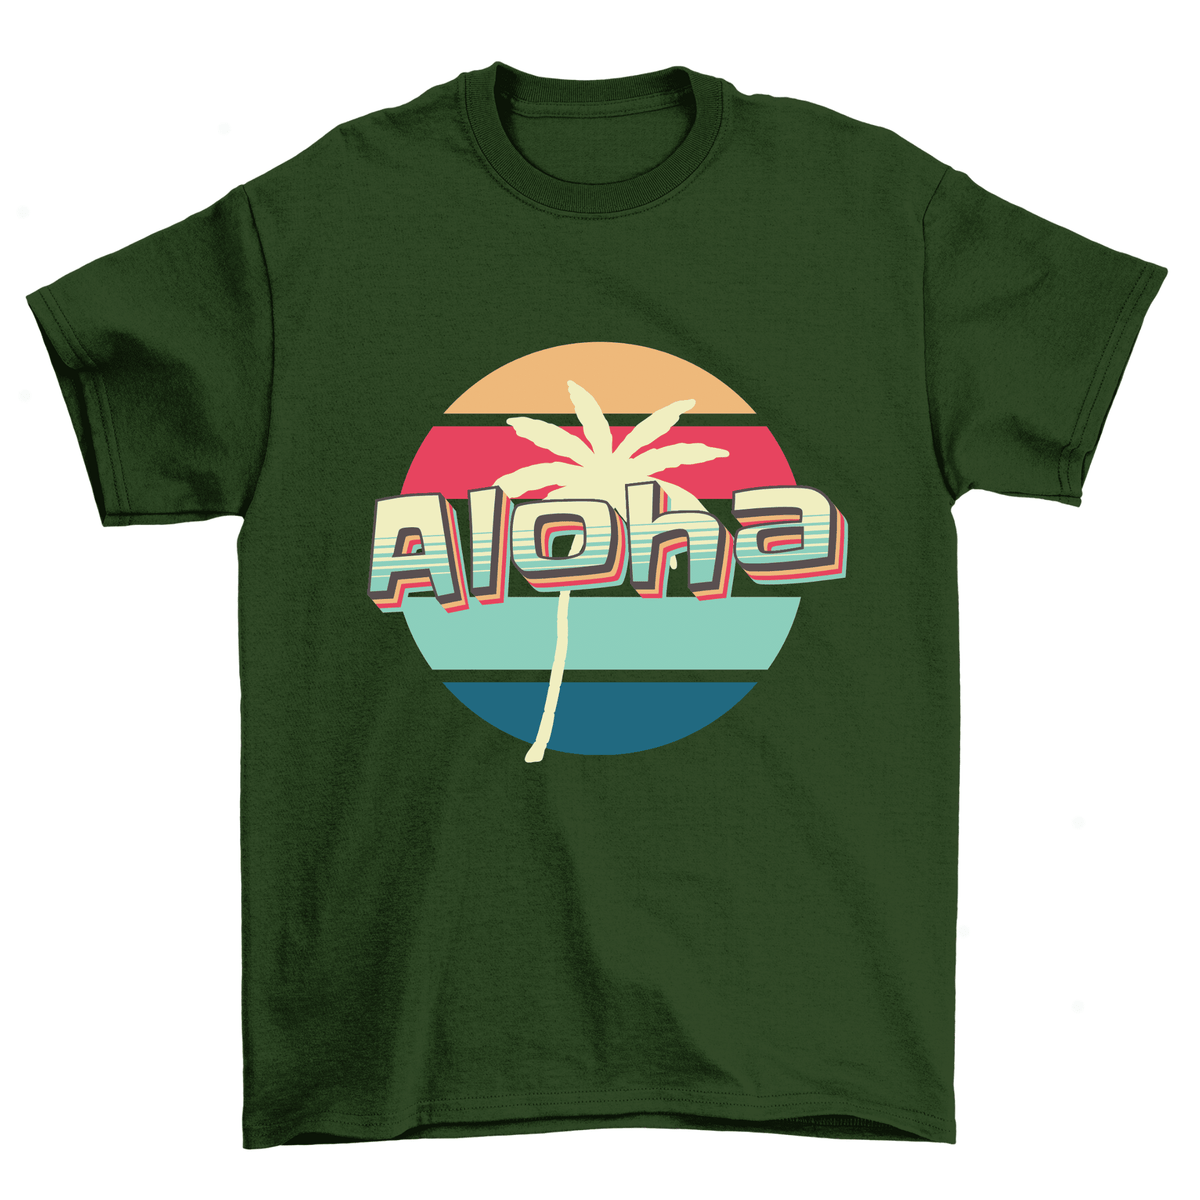 Aloha: Unisex Graphic T-shirt | Graphic Tees